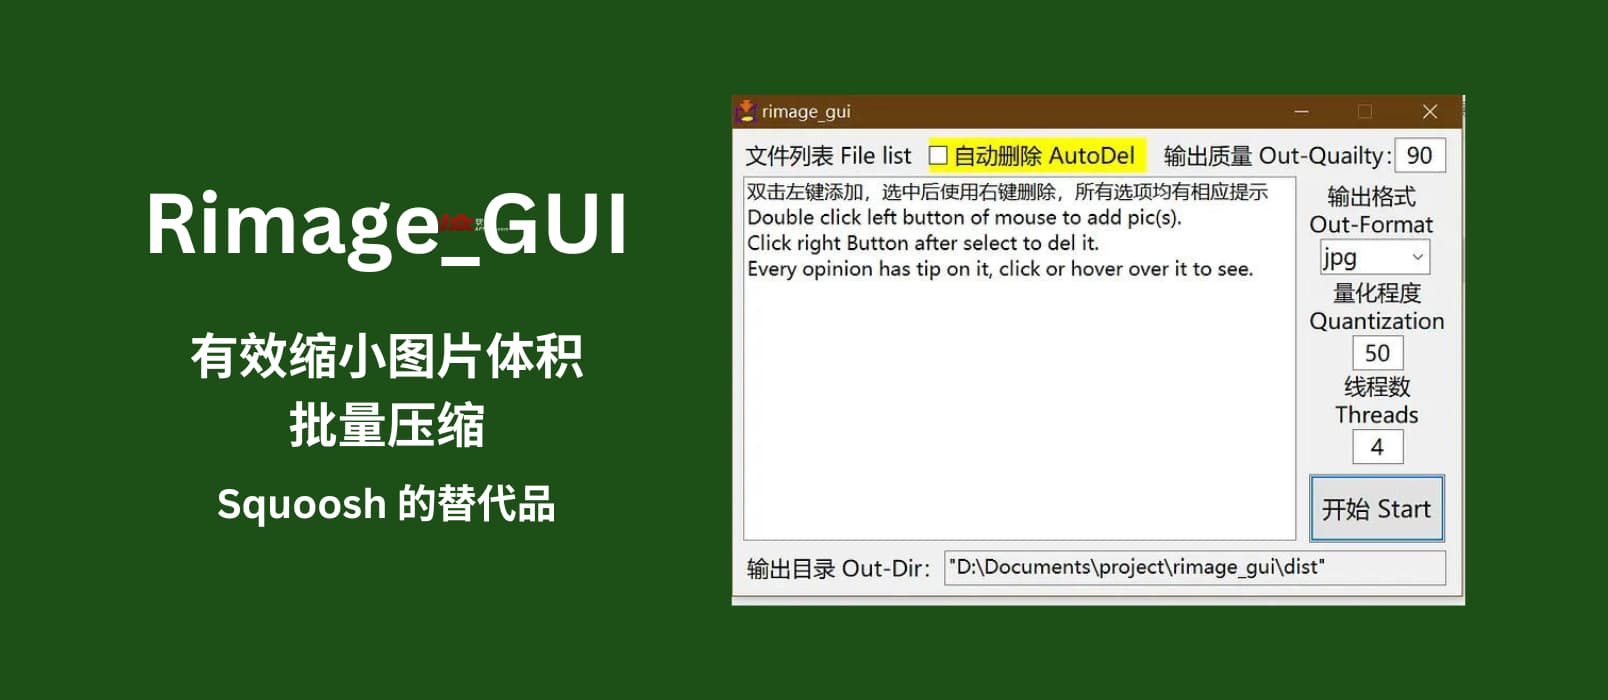 Rimage_GUI - 批量图片压缩工具：Squoosh 替代品，有效缩小图片体积[Windows]